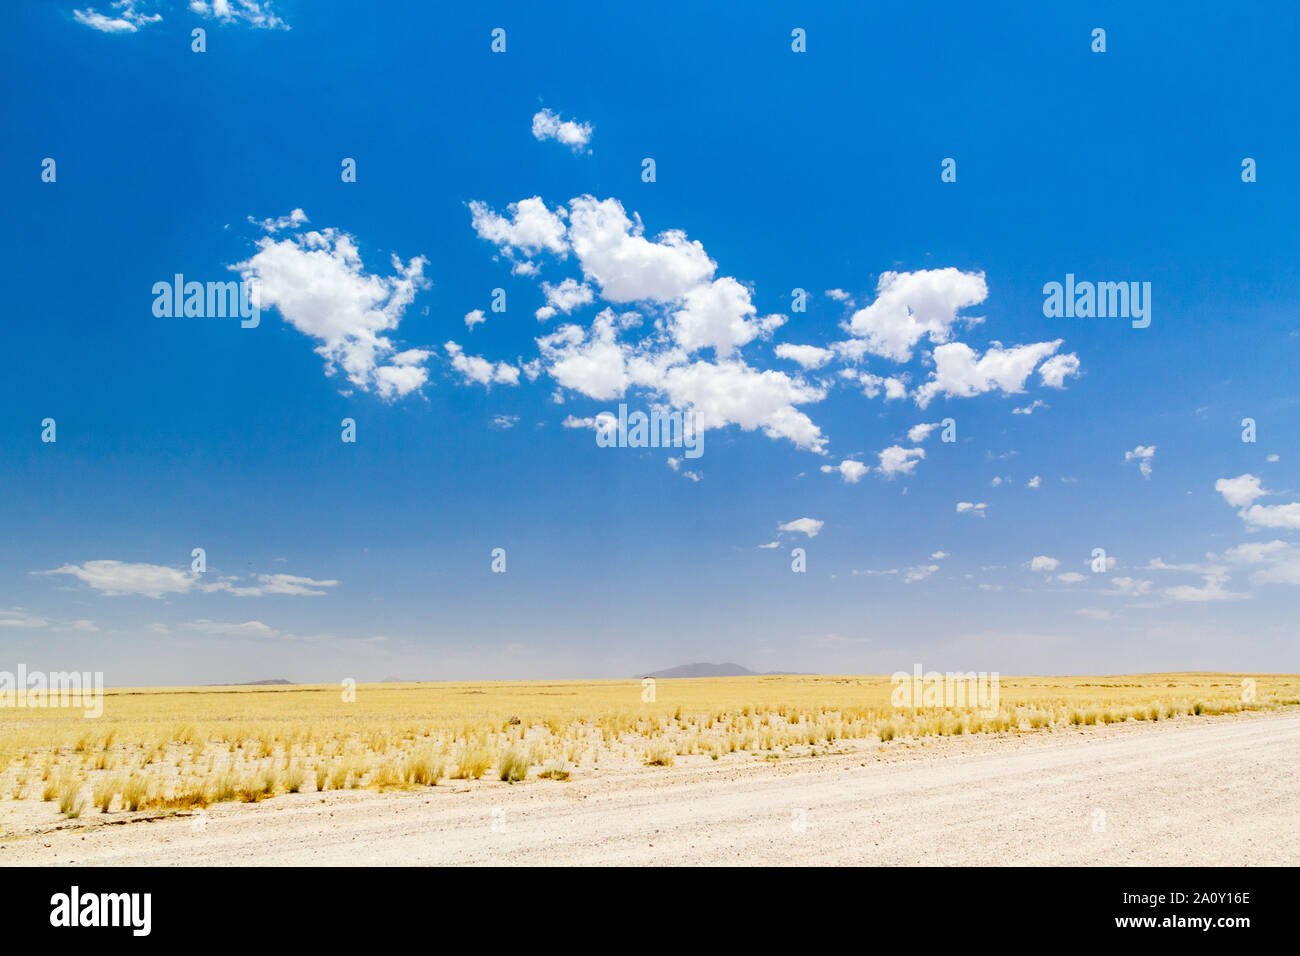 Endless vastness of a golden grass landscape under a blue sky, Namibia, Africa Stock Photo